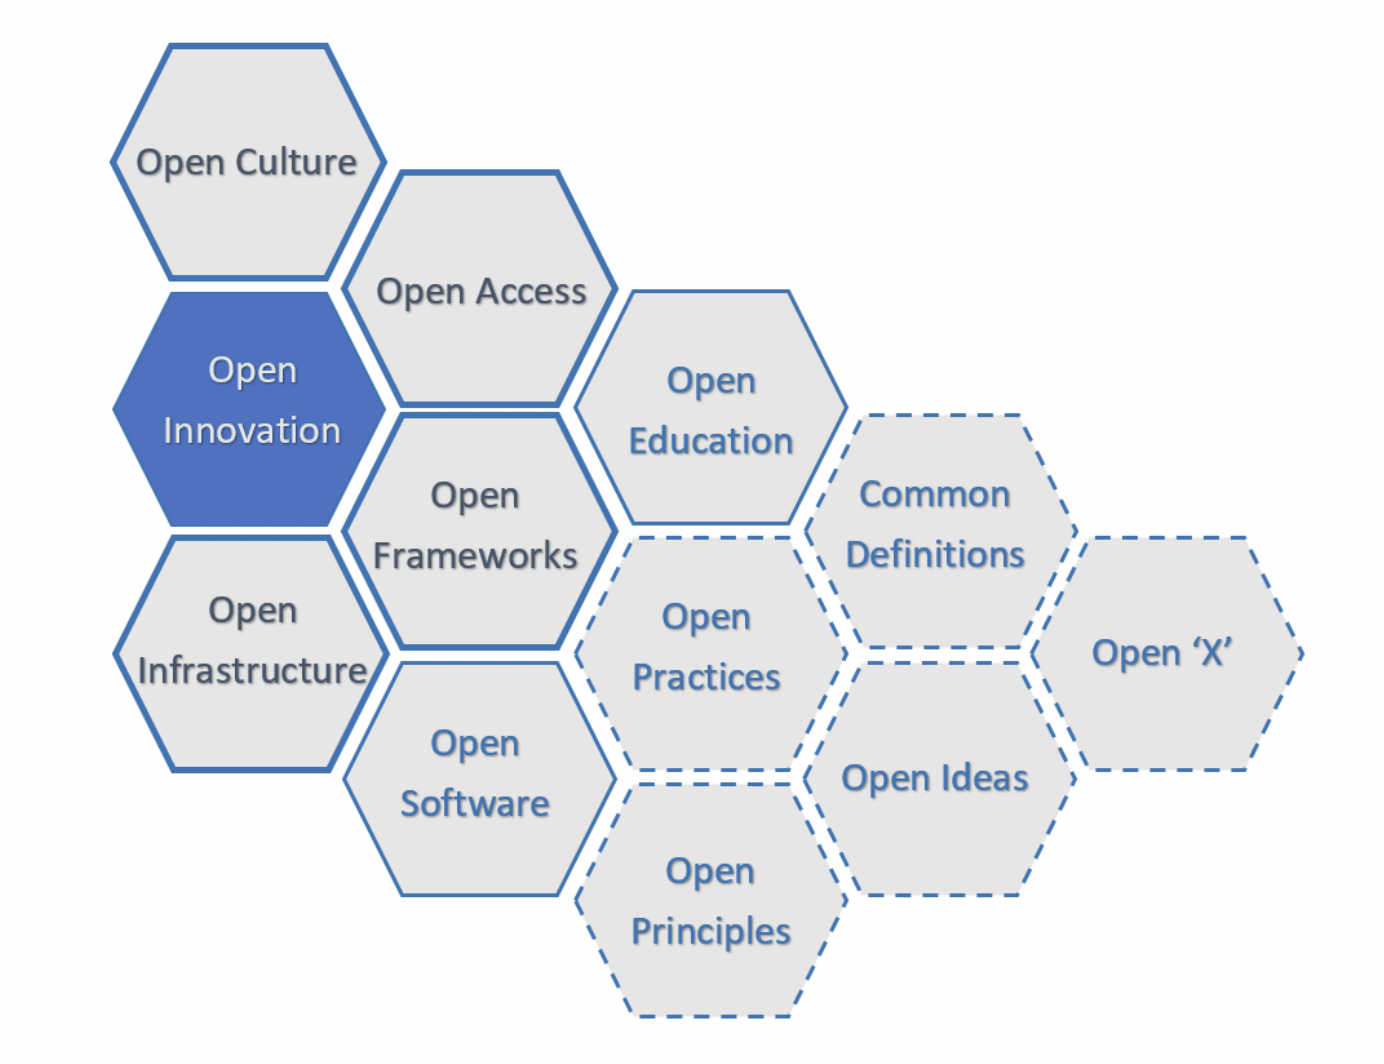 Suggested framework for Open Innovation